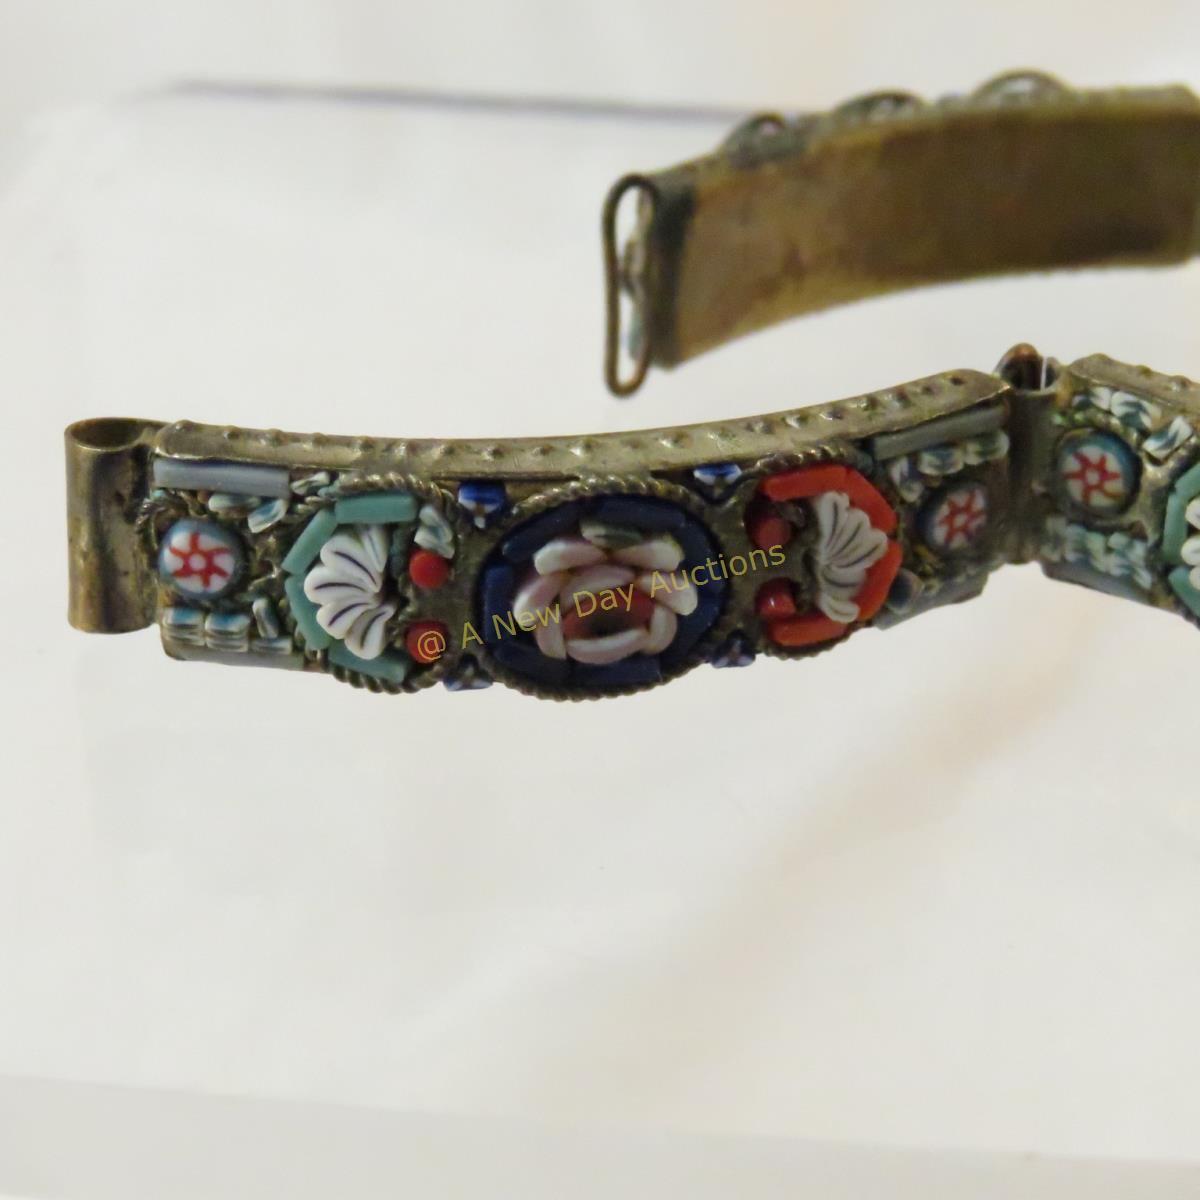 Vintage mosaic brooch and bracelet